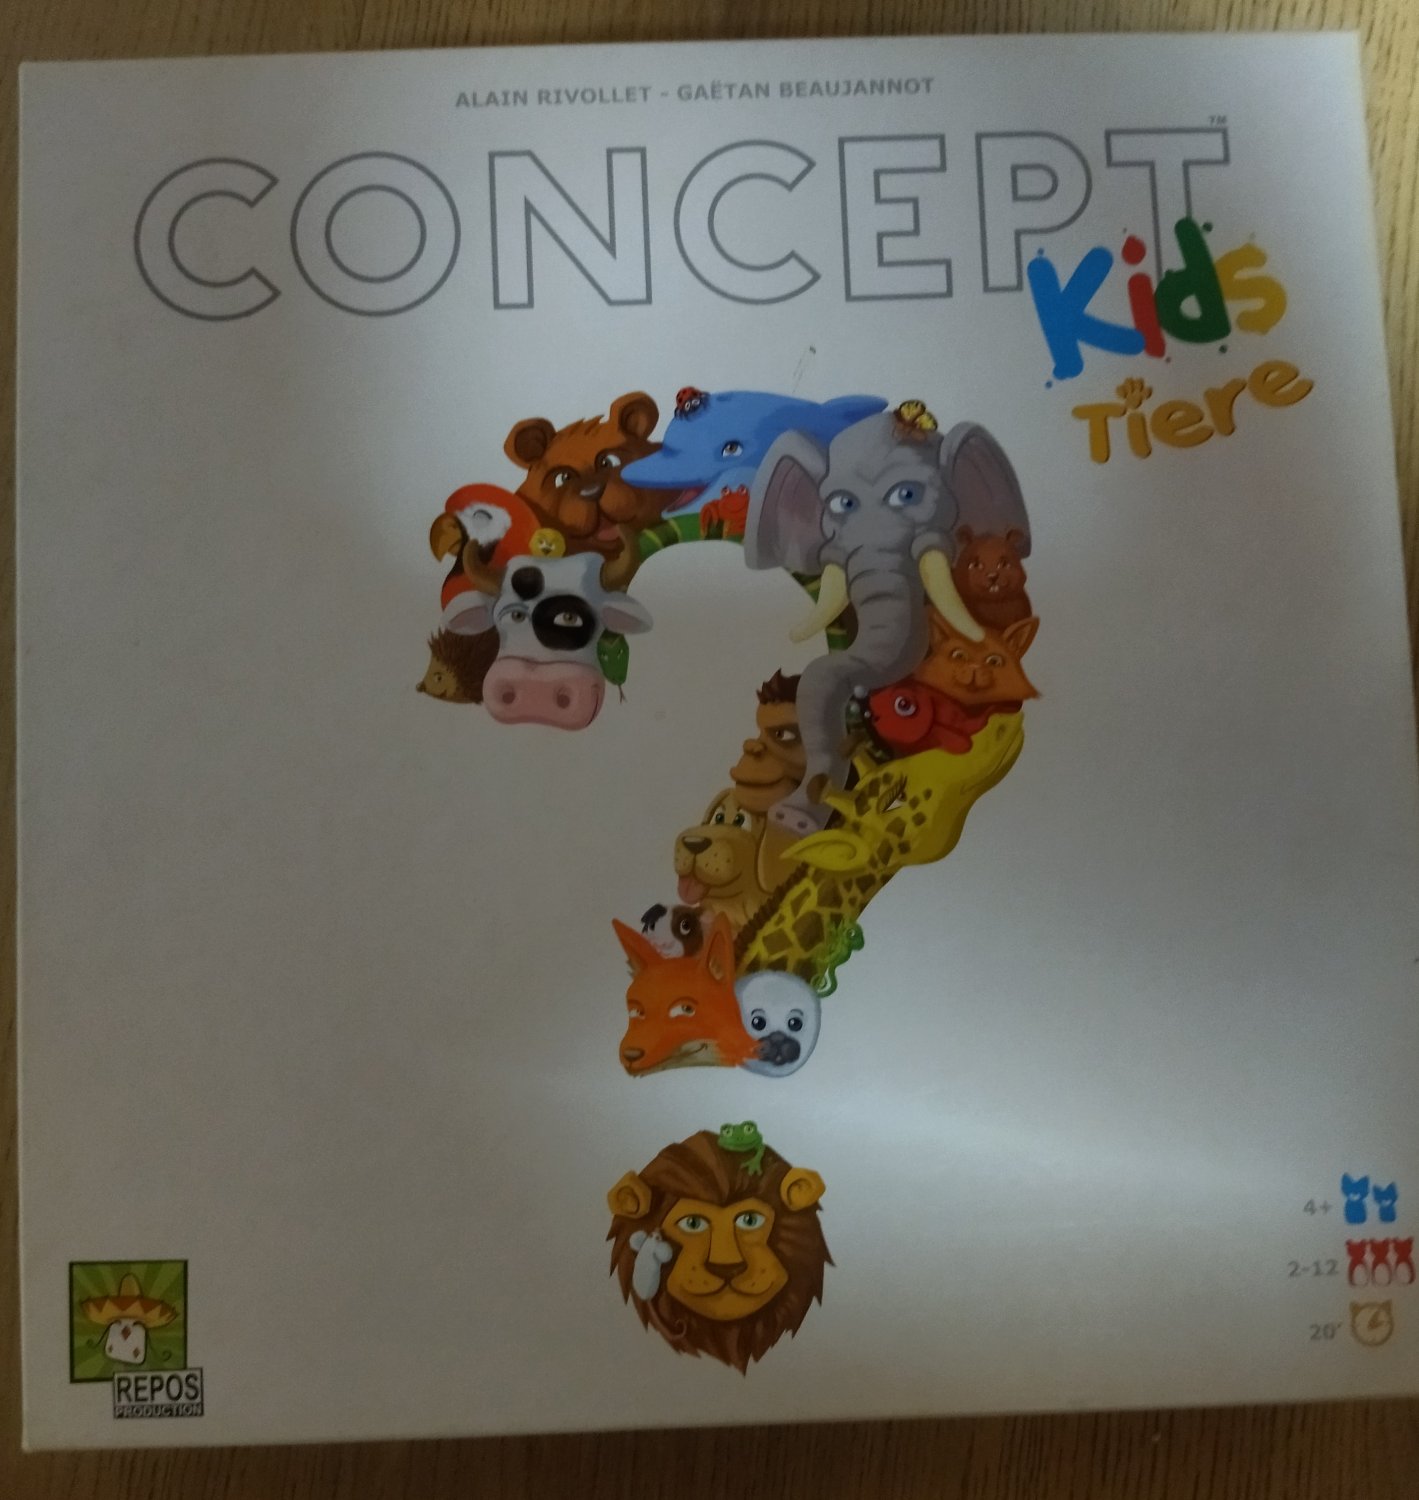 Concept Kids - Tiere